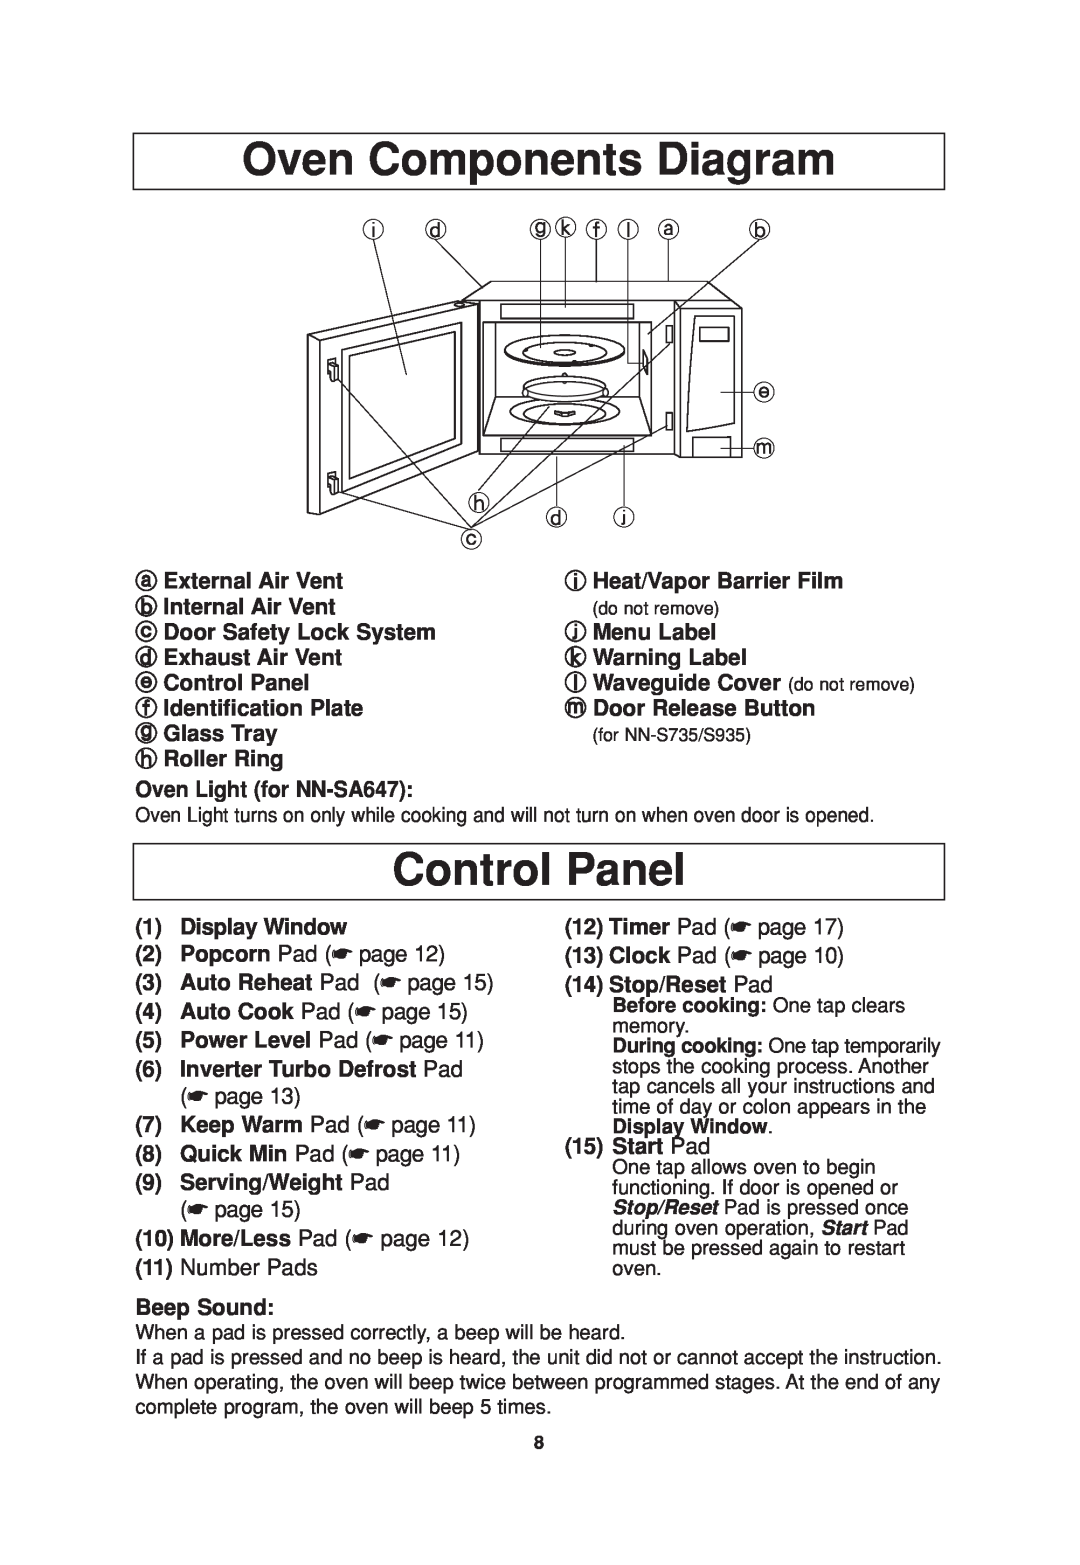 Panasonic NN-S935, NN-SA647, NN-S735 operating instructions Oven Components Diagram, Control Panel 